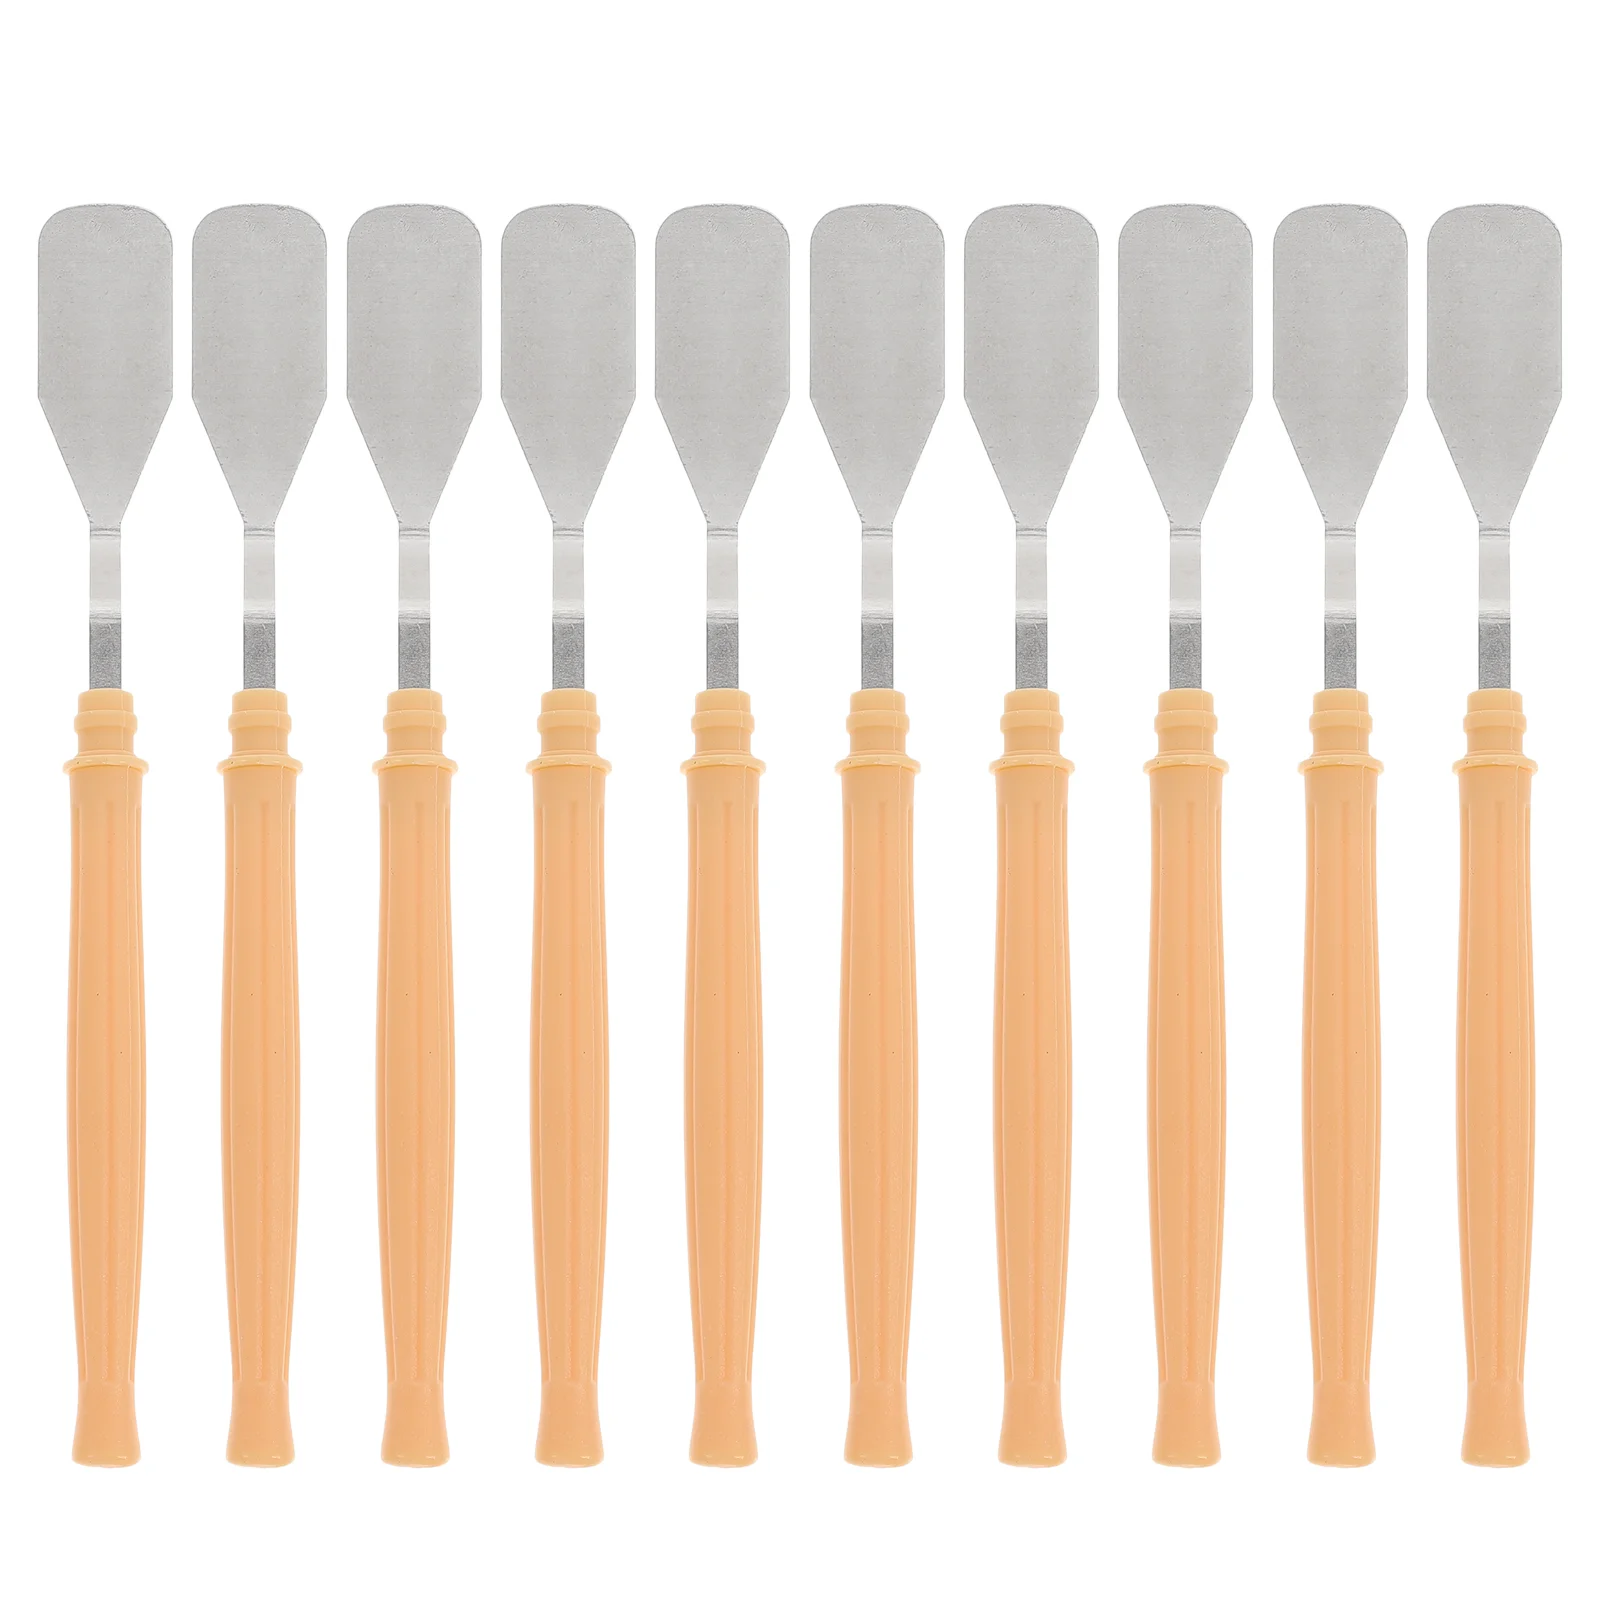 10 Pcs Palette Knife Stainless Steel Artist Supplies Home Artistic Scraper Spatula Paint Drawing